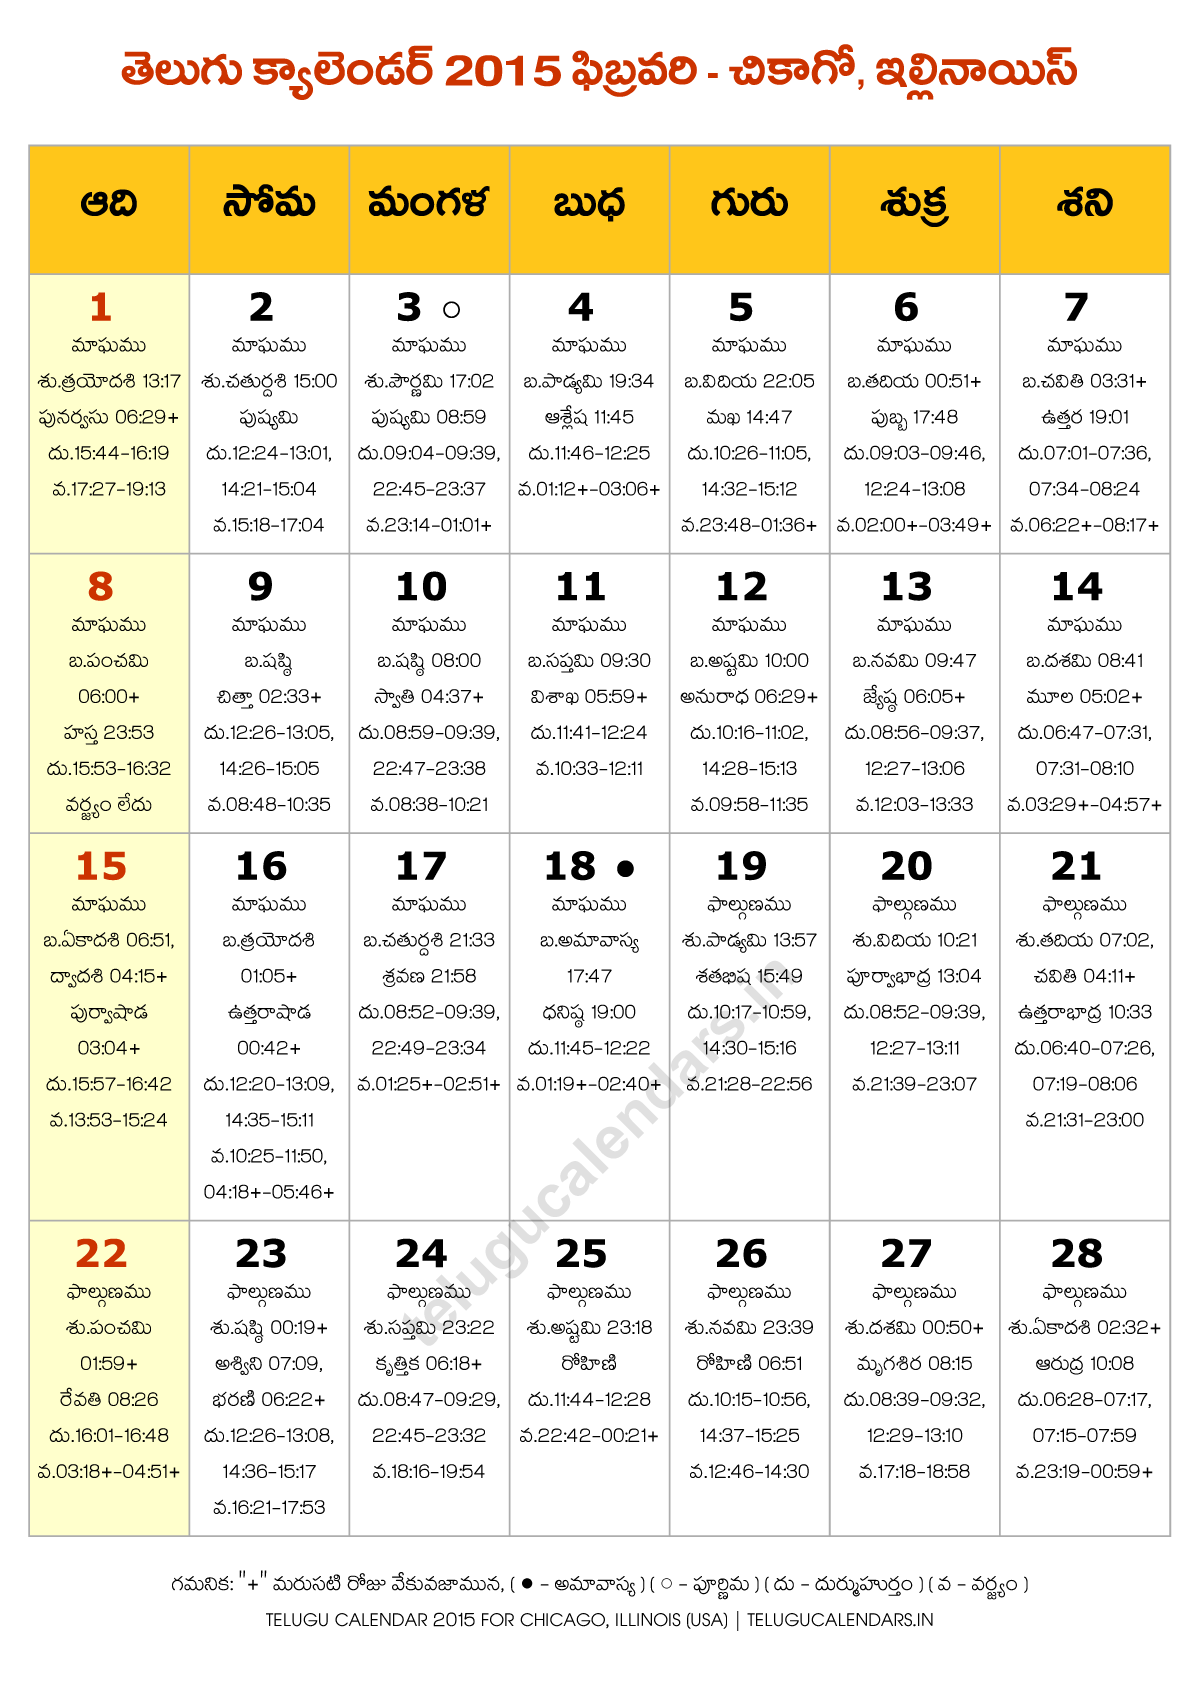 Telugu Calendar (Chicago, USA) 2015 February PDF Telugu Calendars